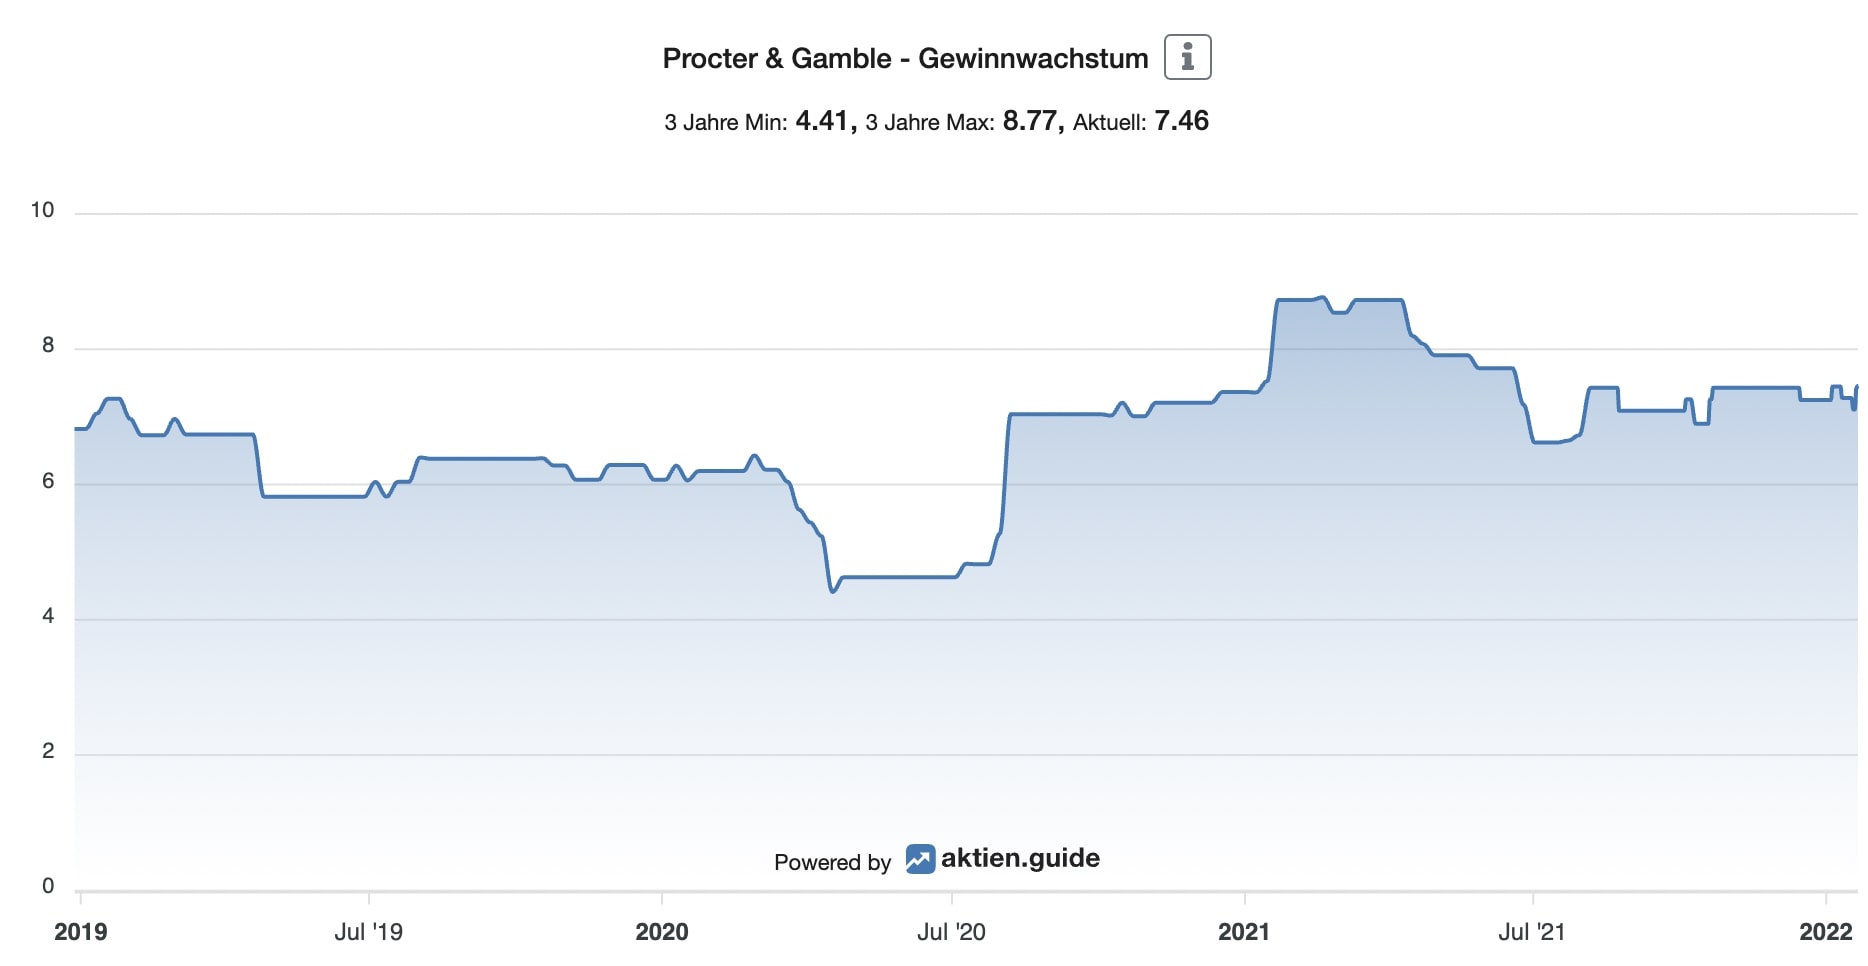 Procter & Gamble Aktie Gewinnwachstum